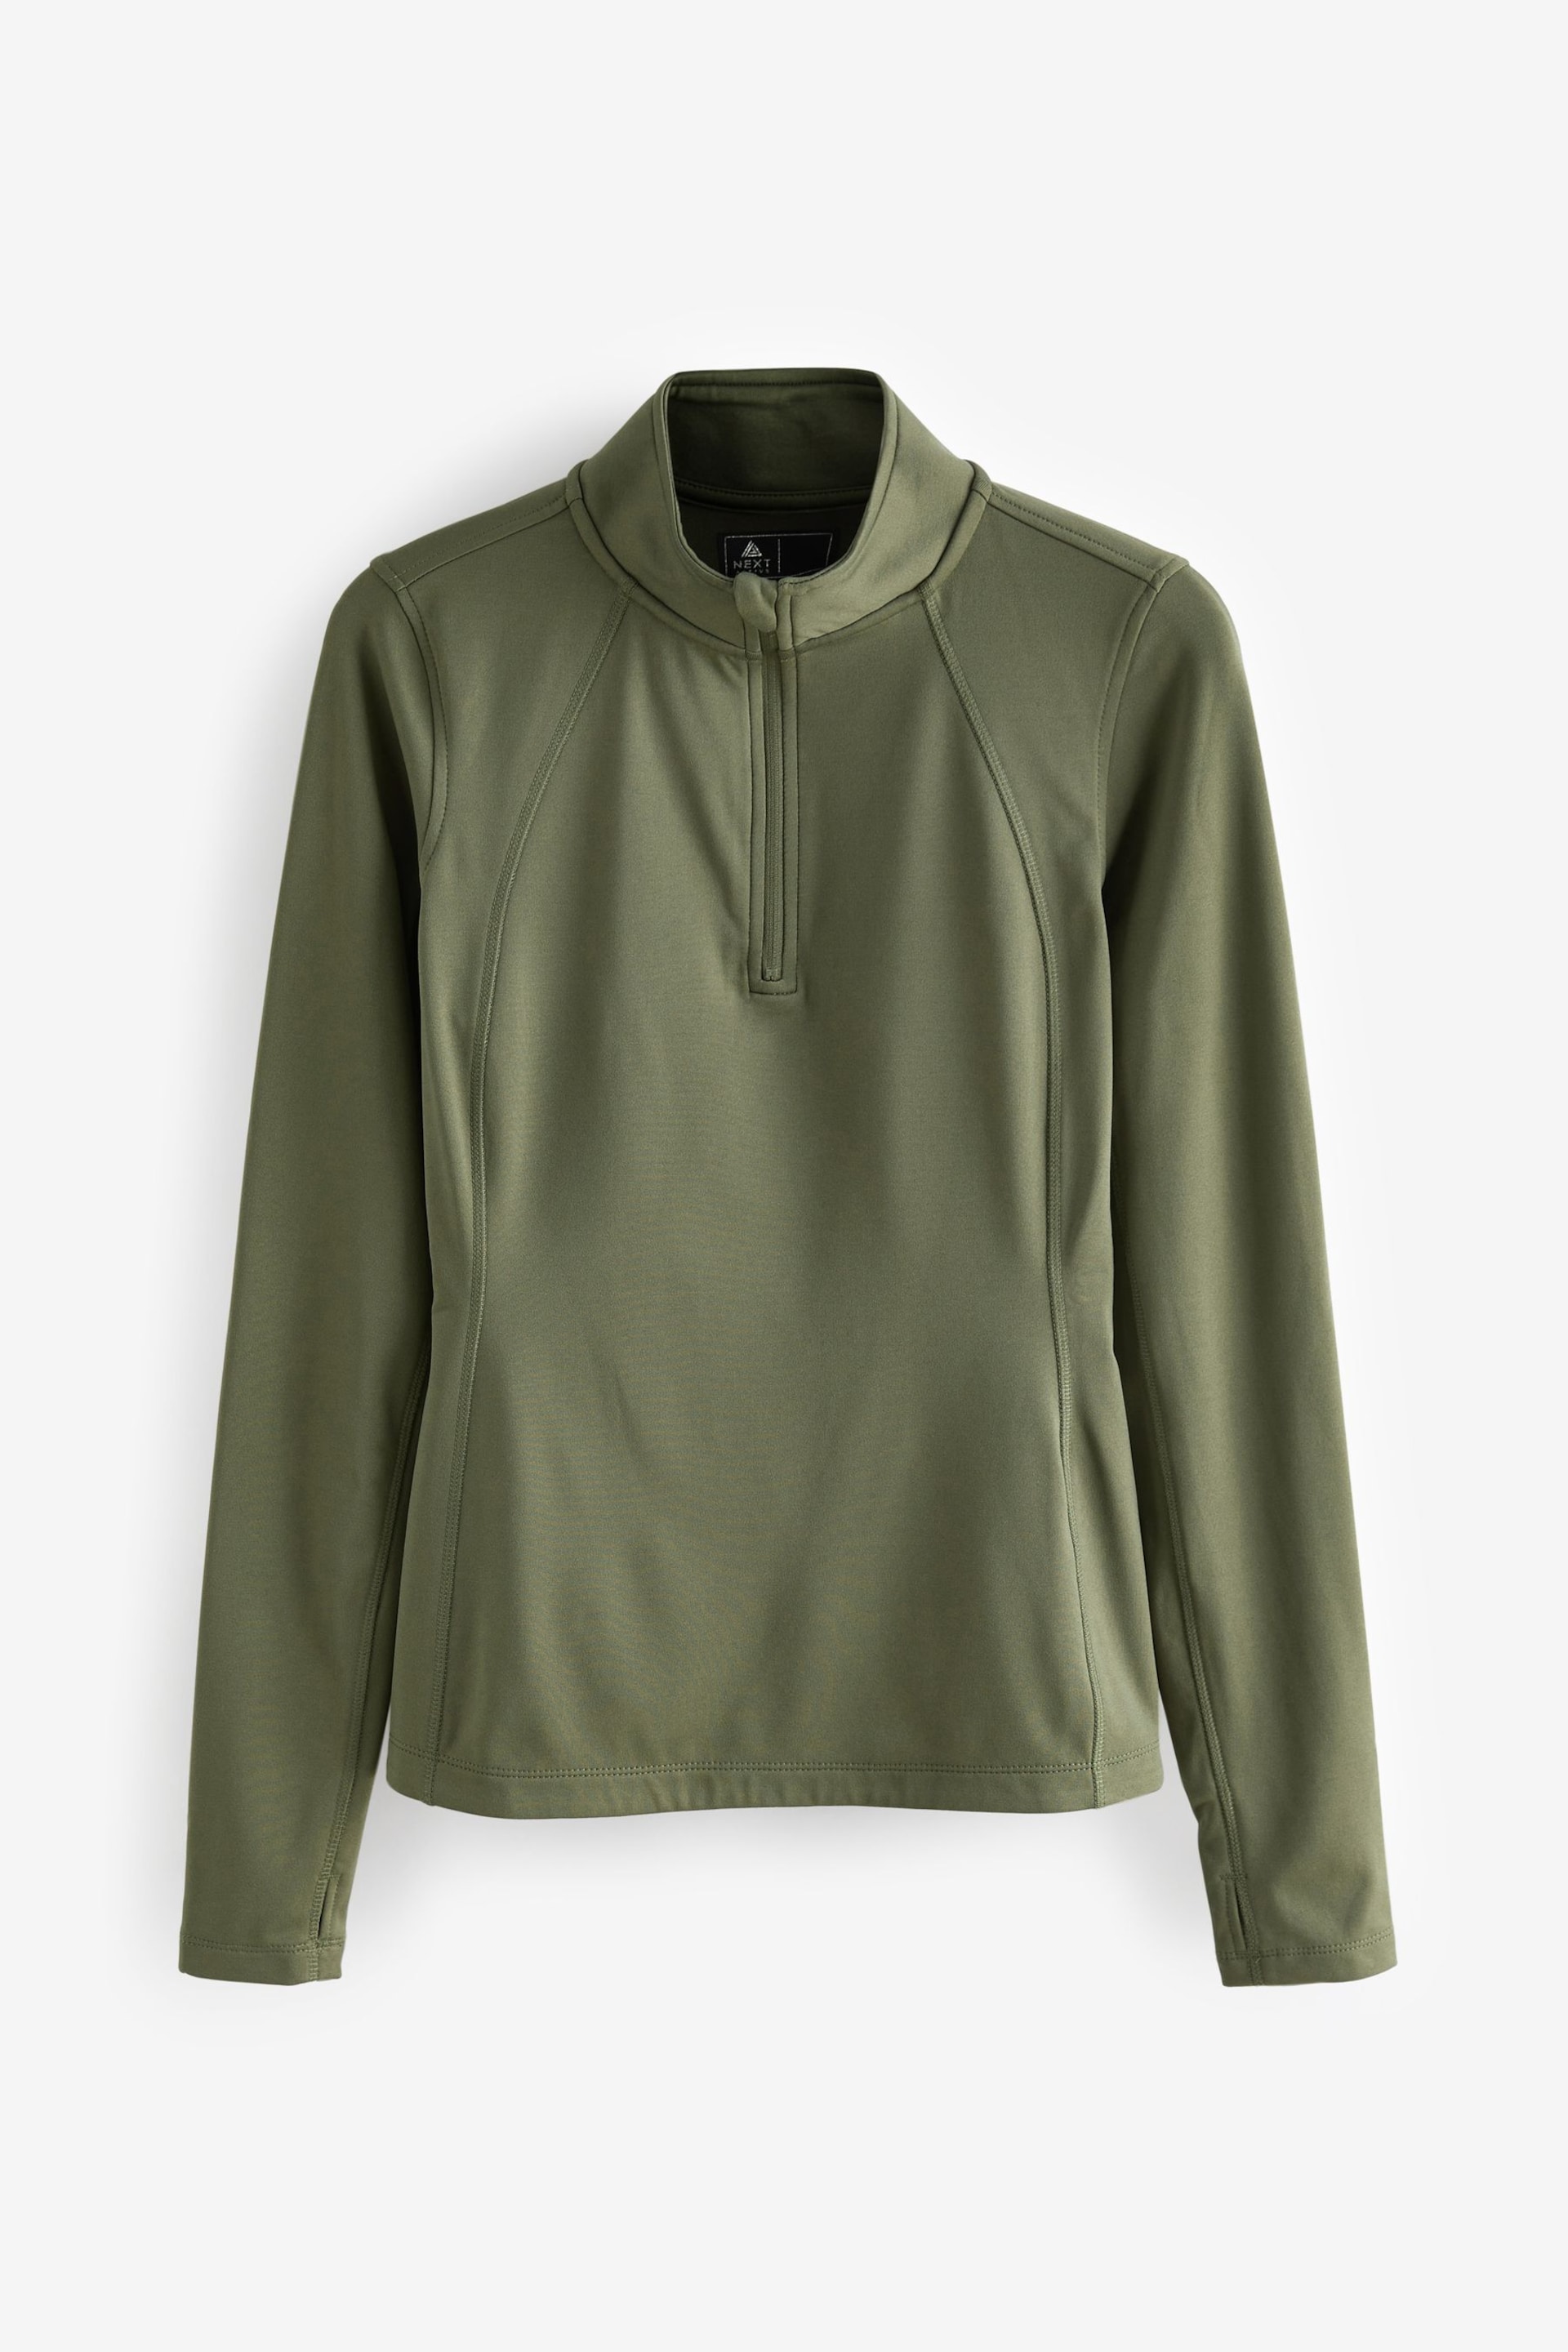 Khaki Green Elements Outdoor Fleece Lined Layer Top - Image 6 of 7